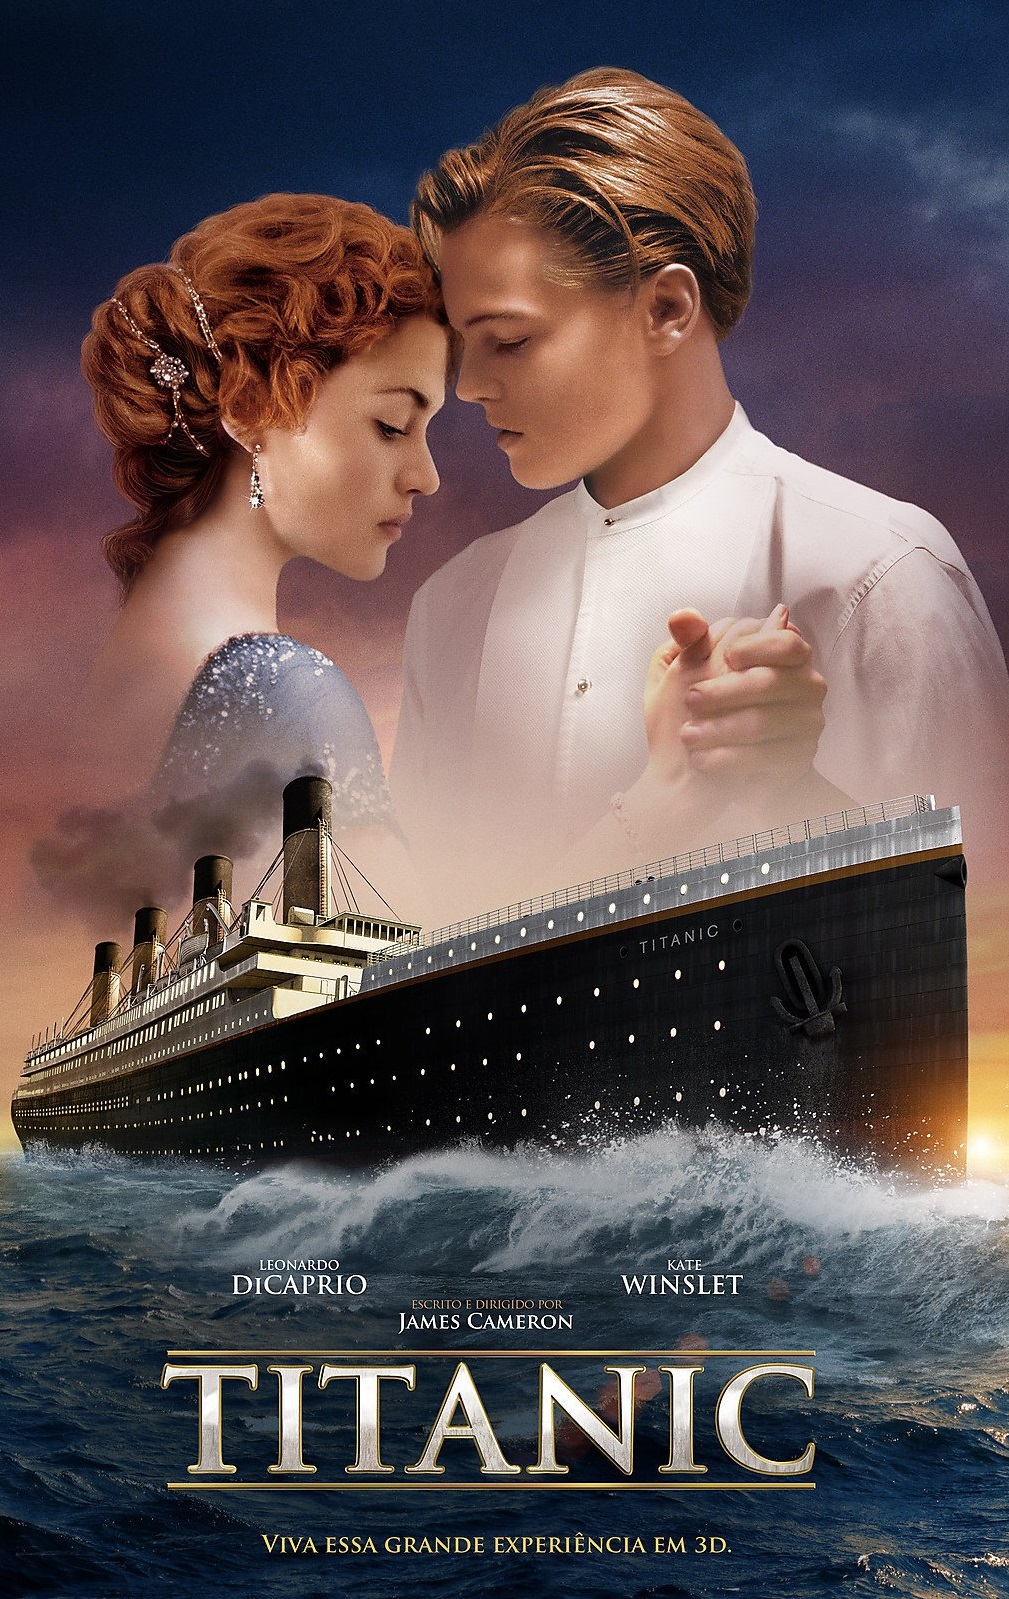 Titanic 1997 Tamil Dubbed Movie Online Free 